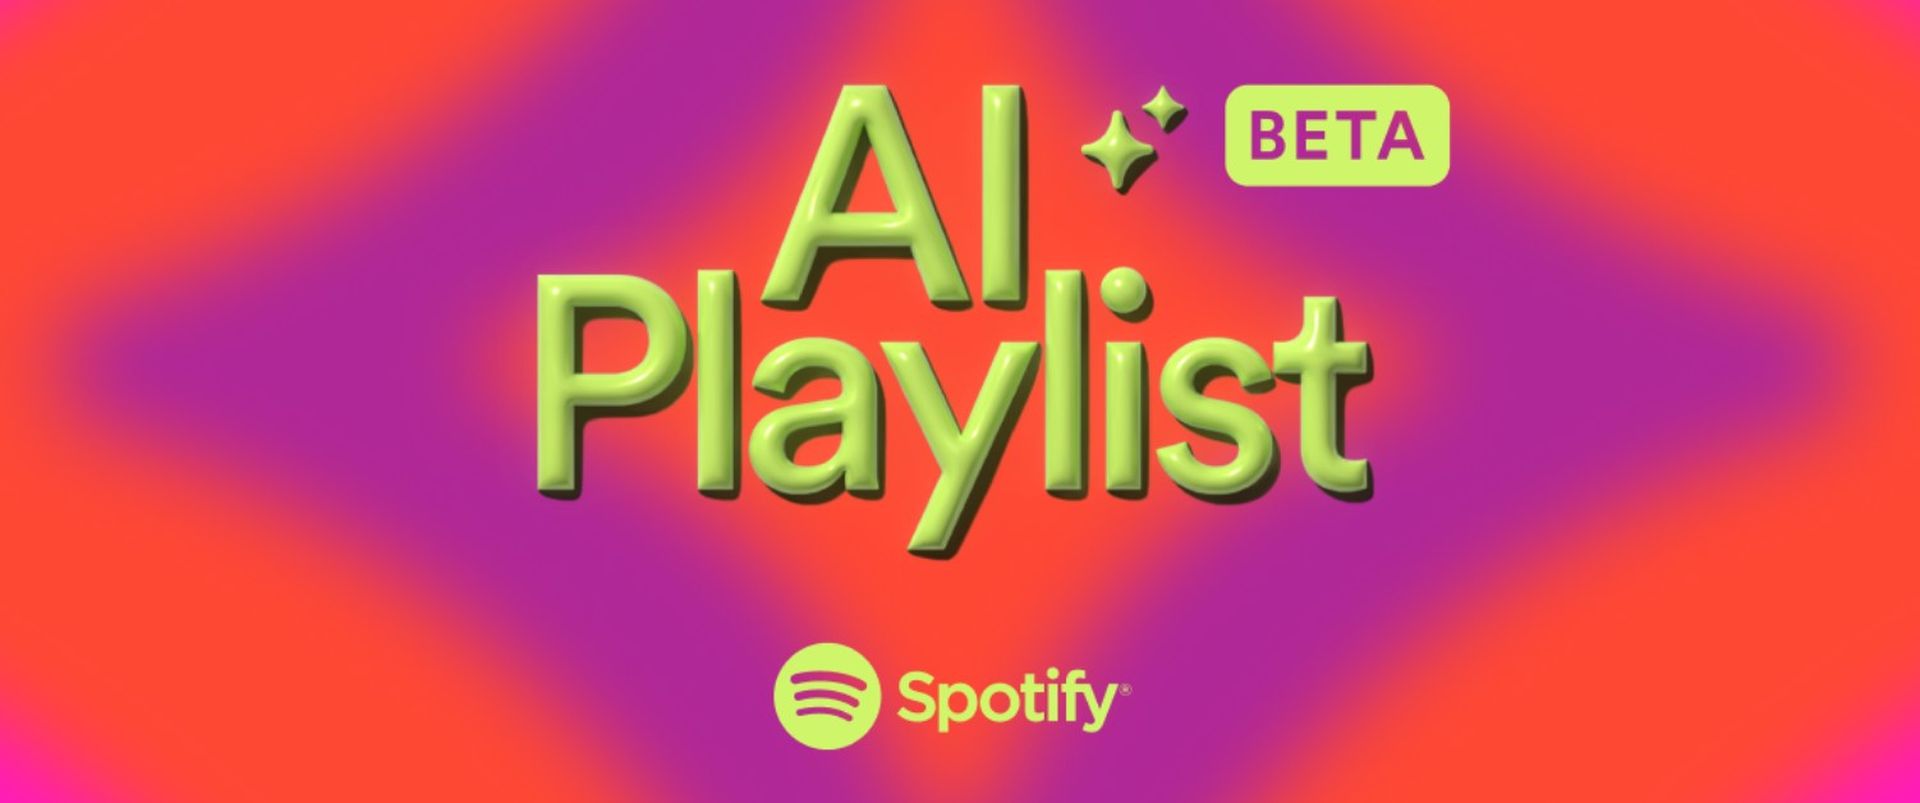 Spotify представил функцию AI Playlist